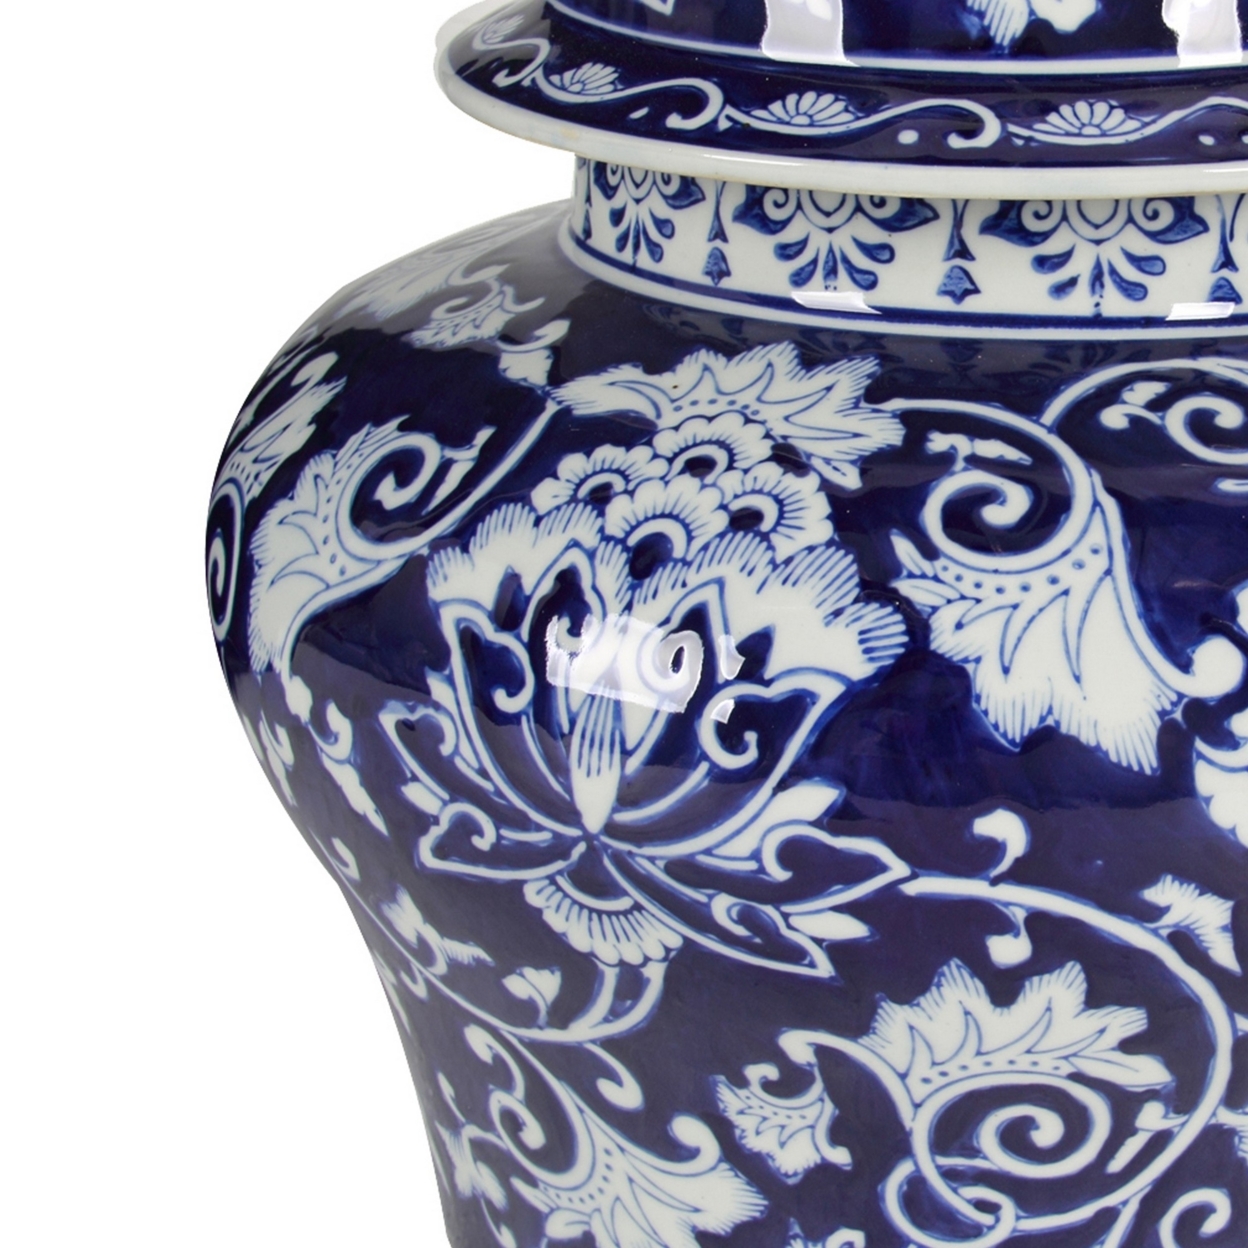 17 Inch Porcelain Ginger Jar, Decorative Floral Design Classic White, Blue- Saltoro Sherpi